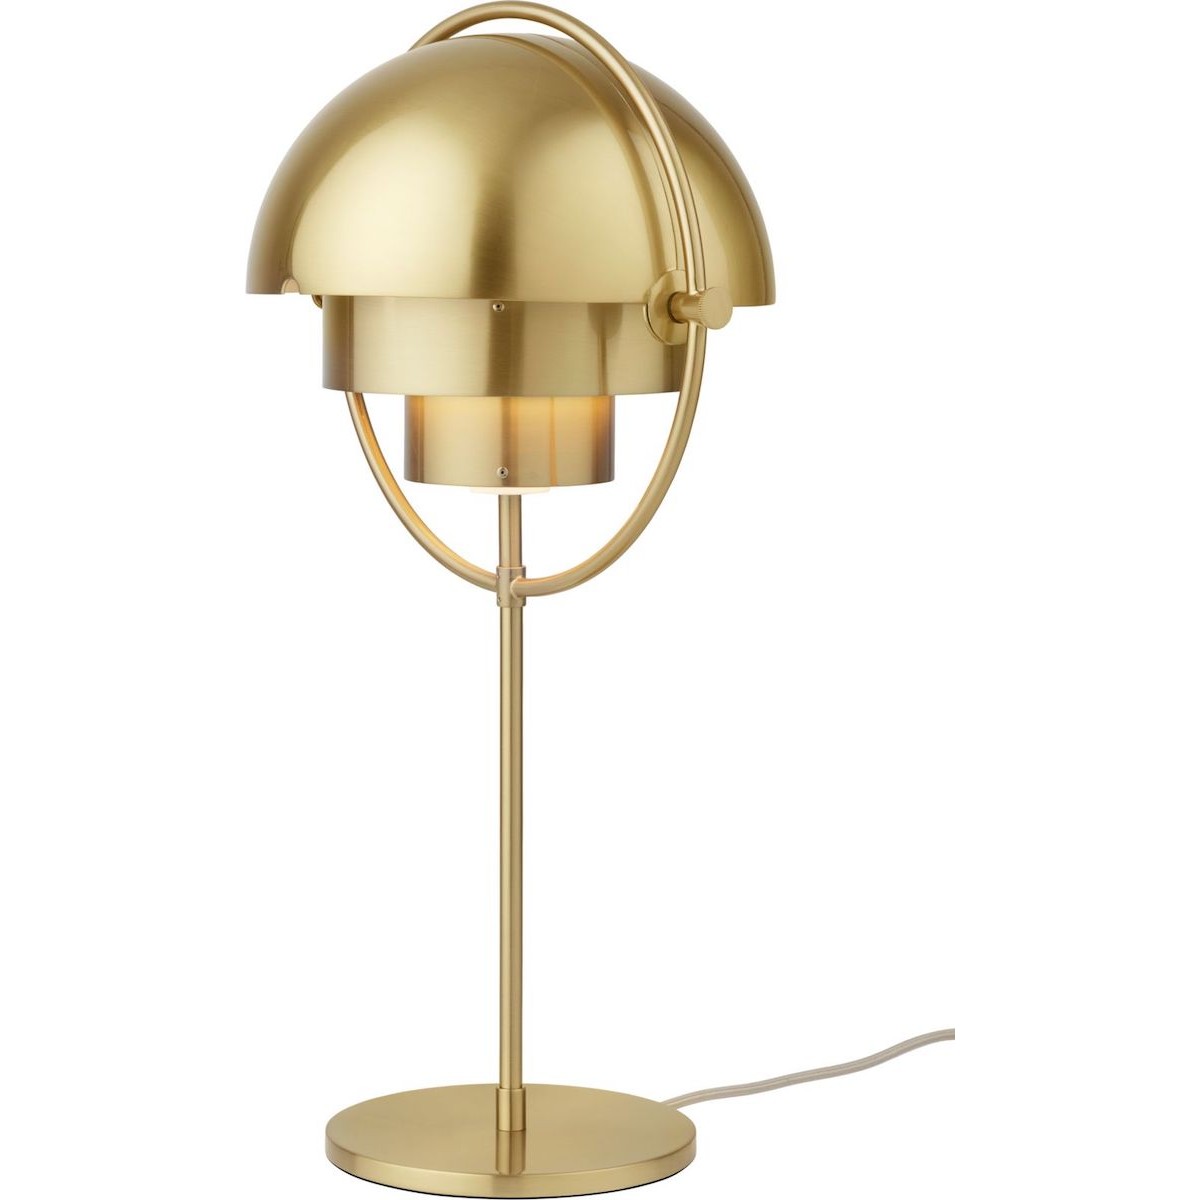 shiny brass / brass - Multi-Lite table lamp